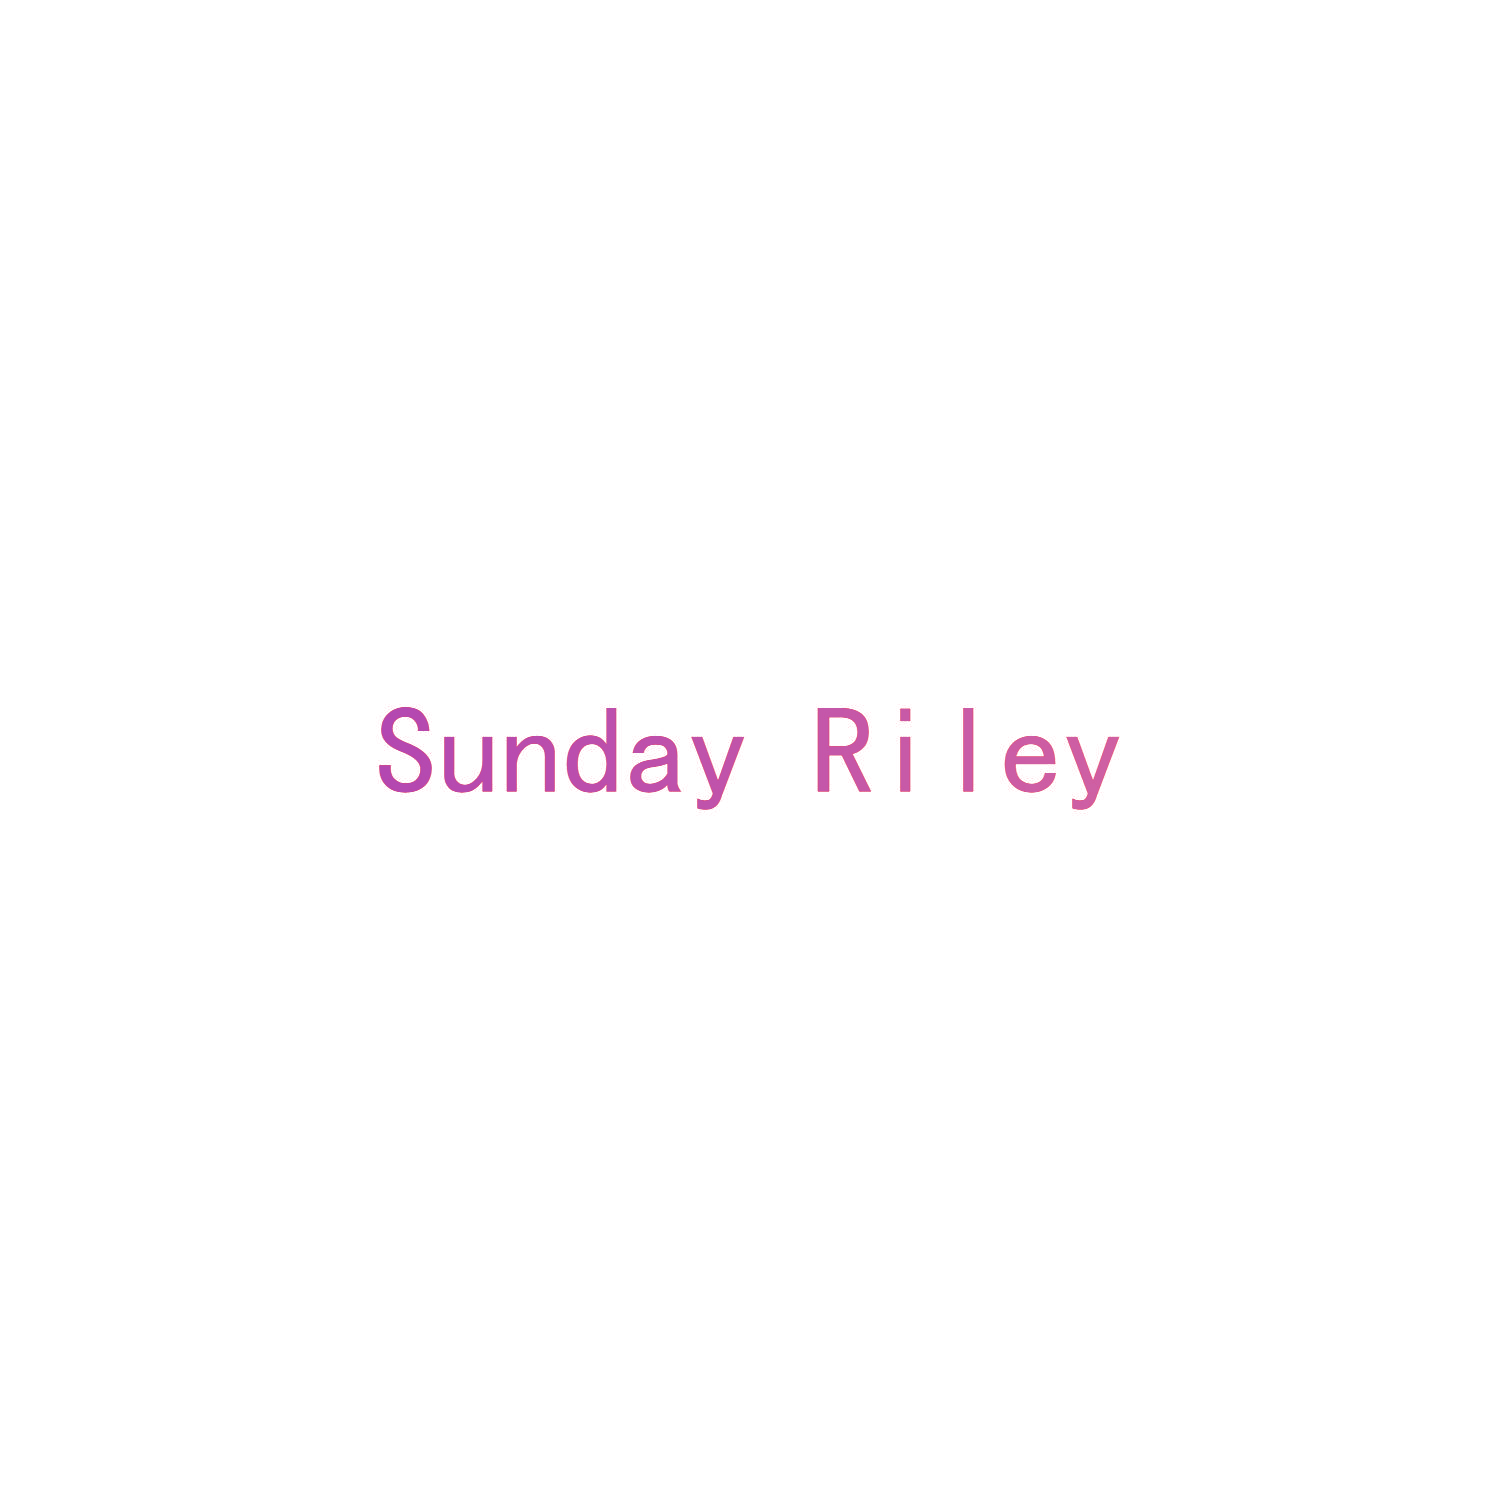 SUNDAY RILEY